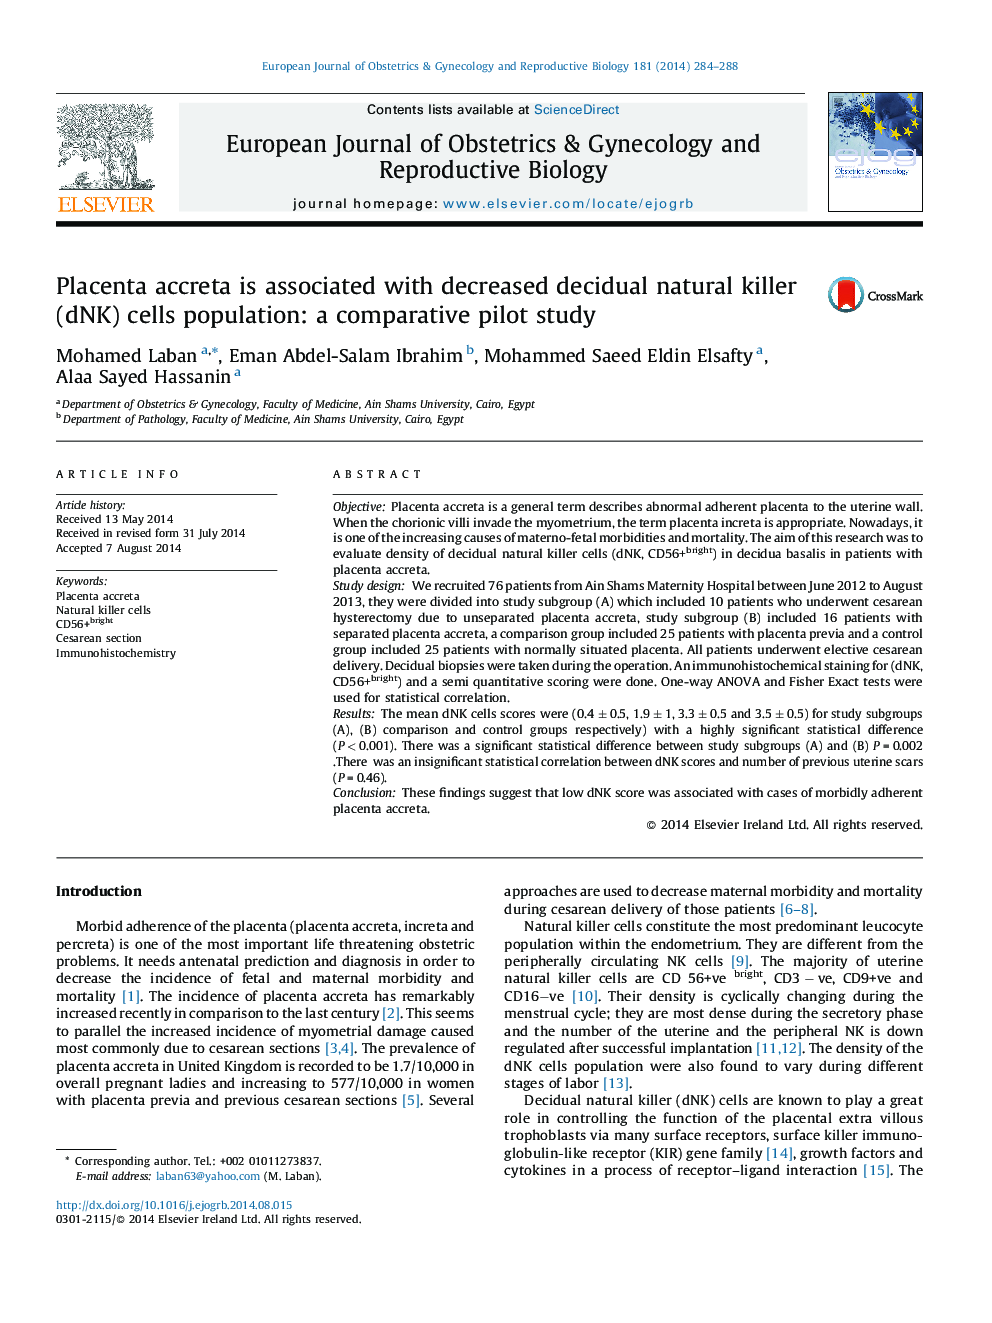 Placenta accreta is associated with decreased decidual natural killer (dNK) cells population: a comparative pilot study